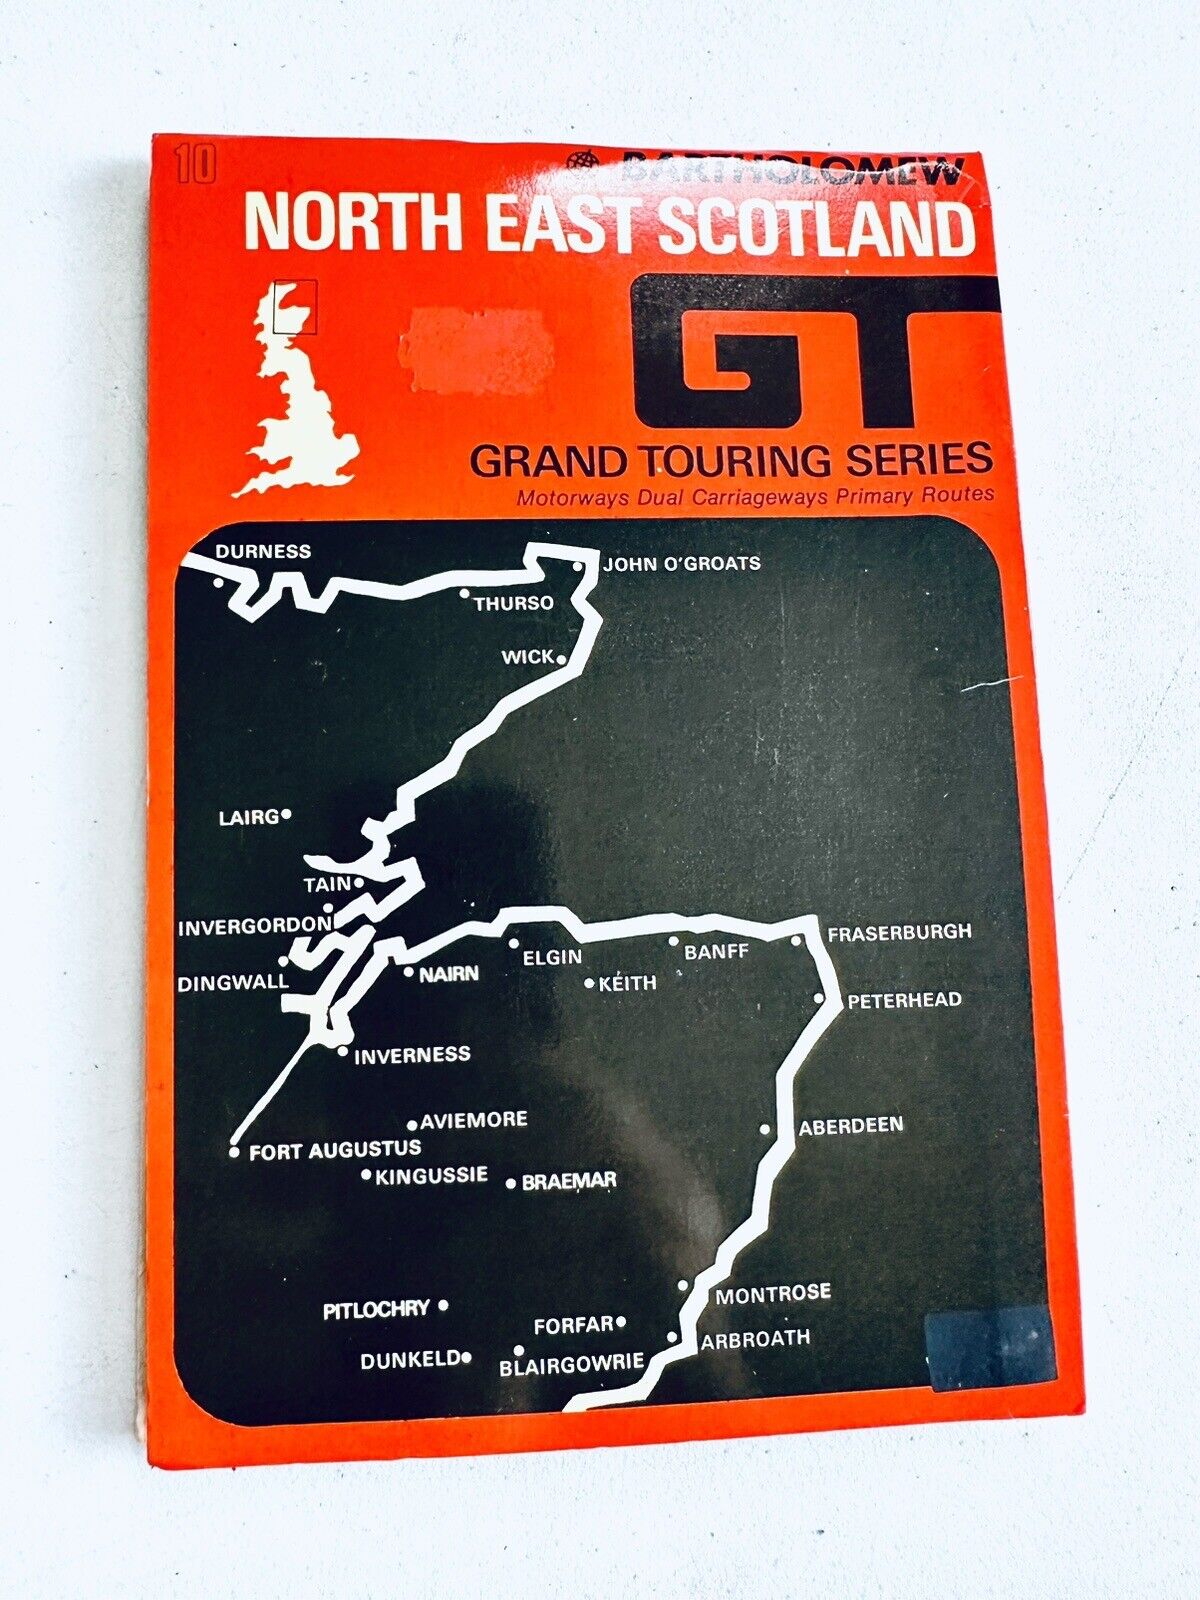 Vintage 1977 North East Scotland GT Grand Touring Series Map (Bartholomew)